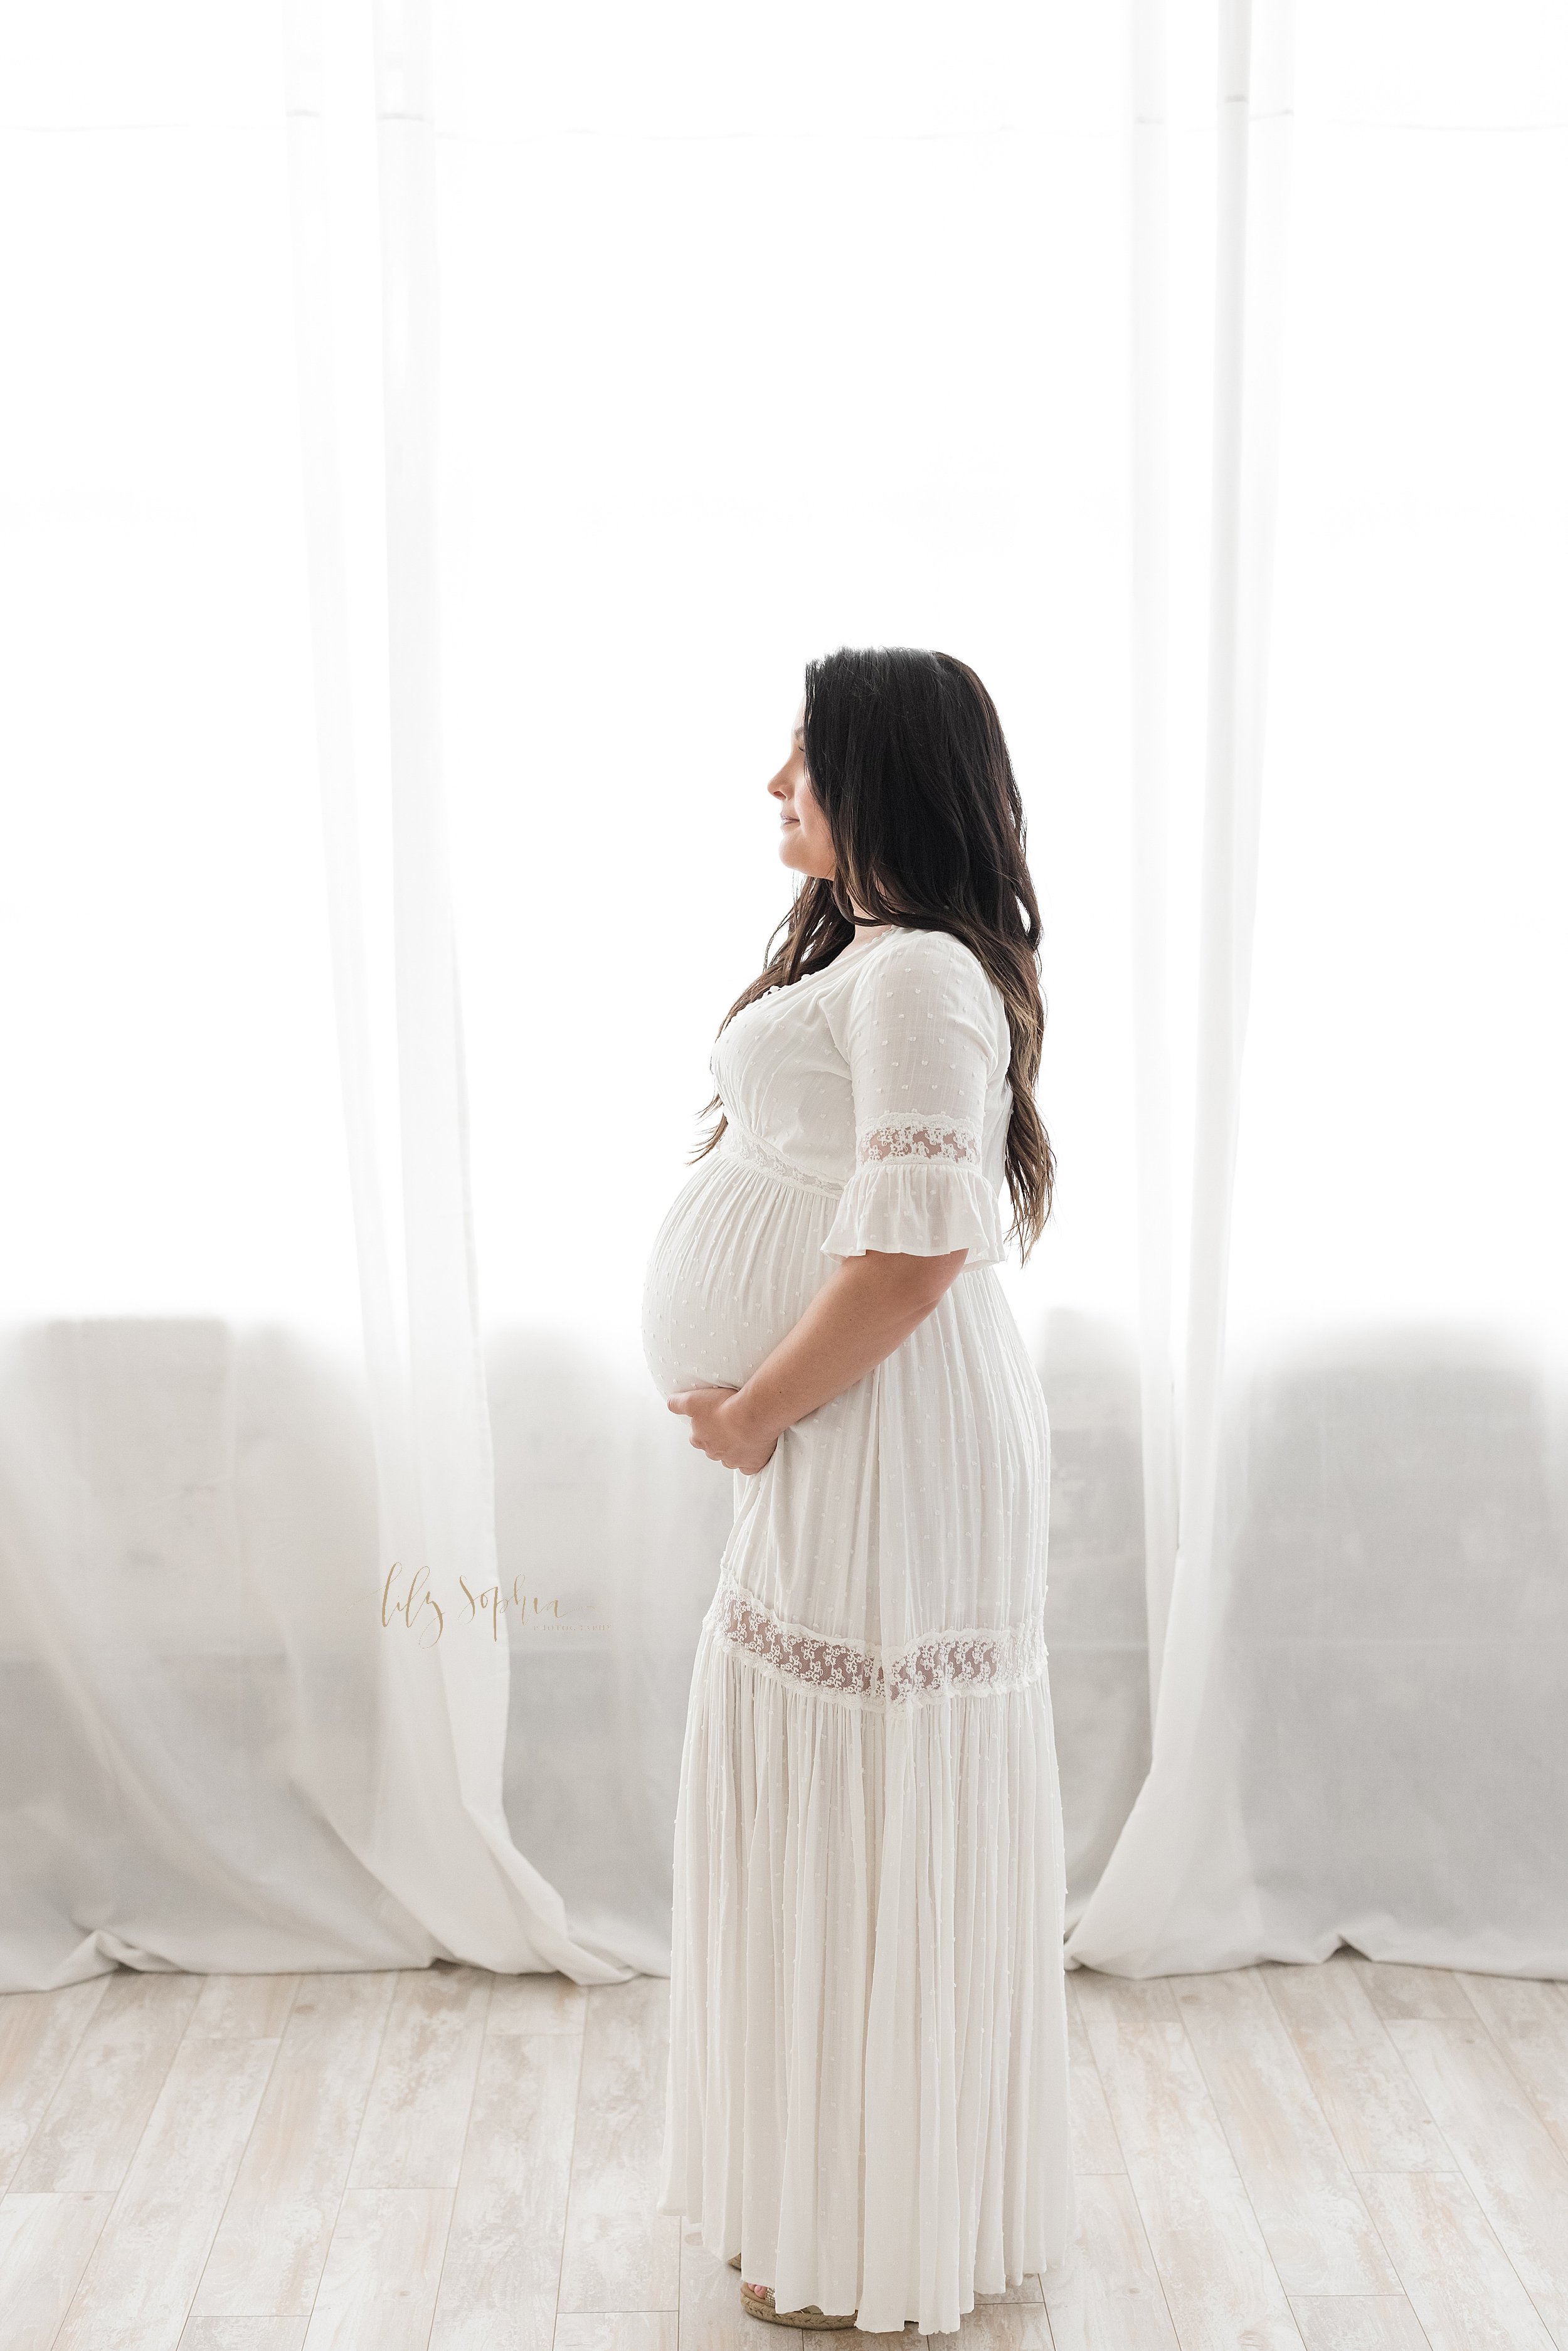 atlanta-pregnancy-photos-expecting-baby-girl-studio-maternity-photoshoot-lawrenceville-oakhurst-decatur-kirkwood--brookhaven-buckhead-smyrna-mableton-midtown-virginia-highlands_8791.jpg